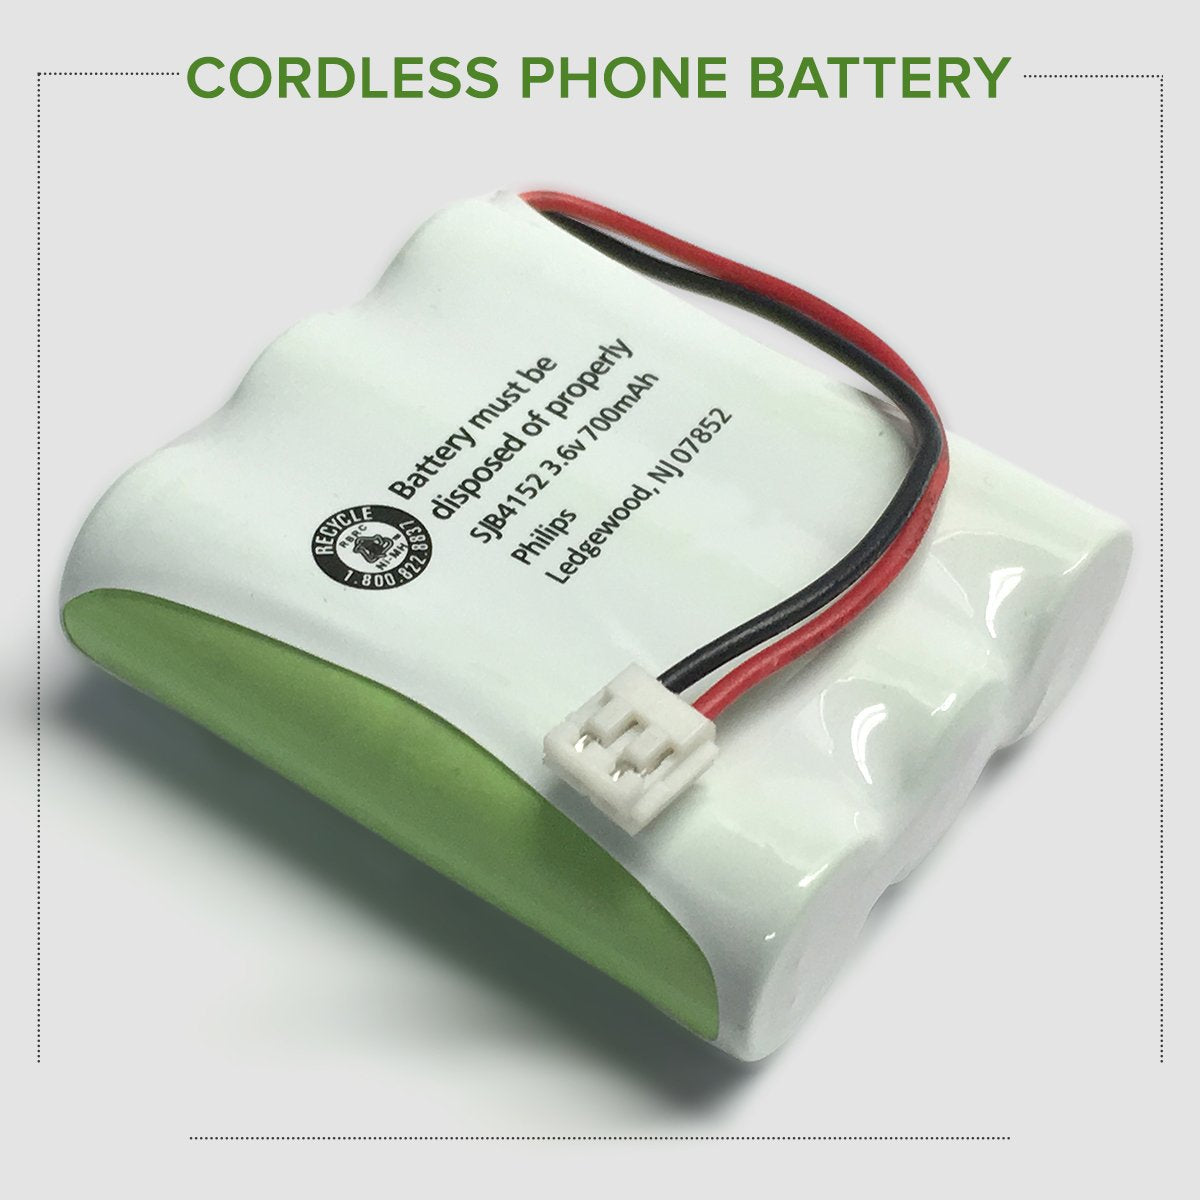 Sony SPP-950 Cordless Phone Battery